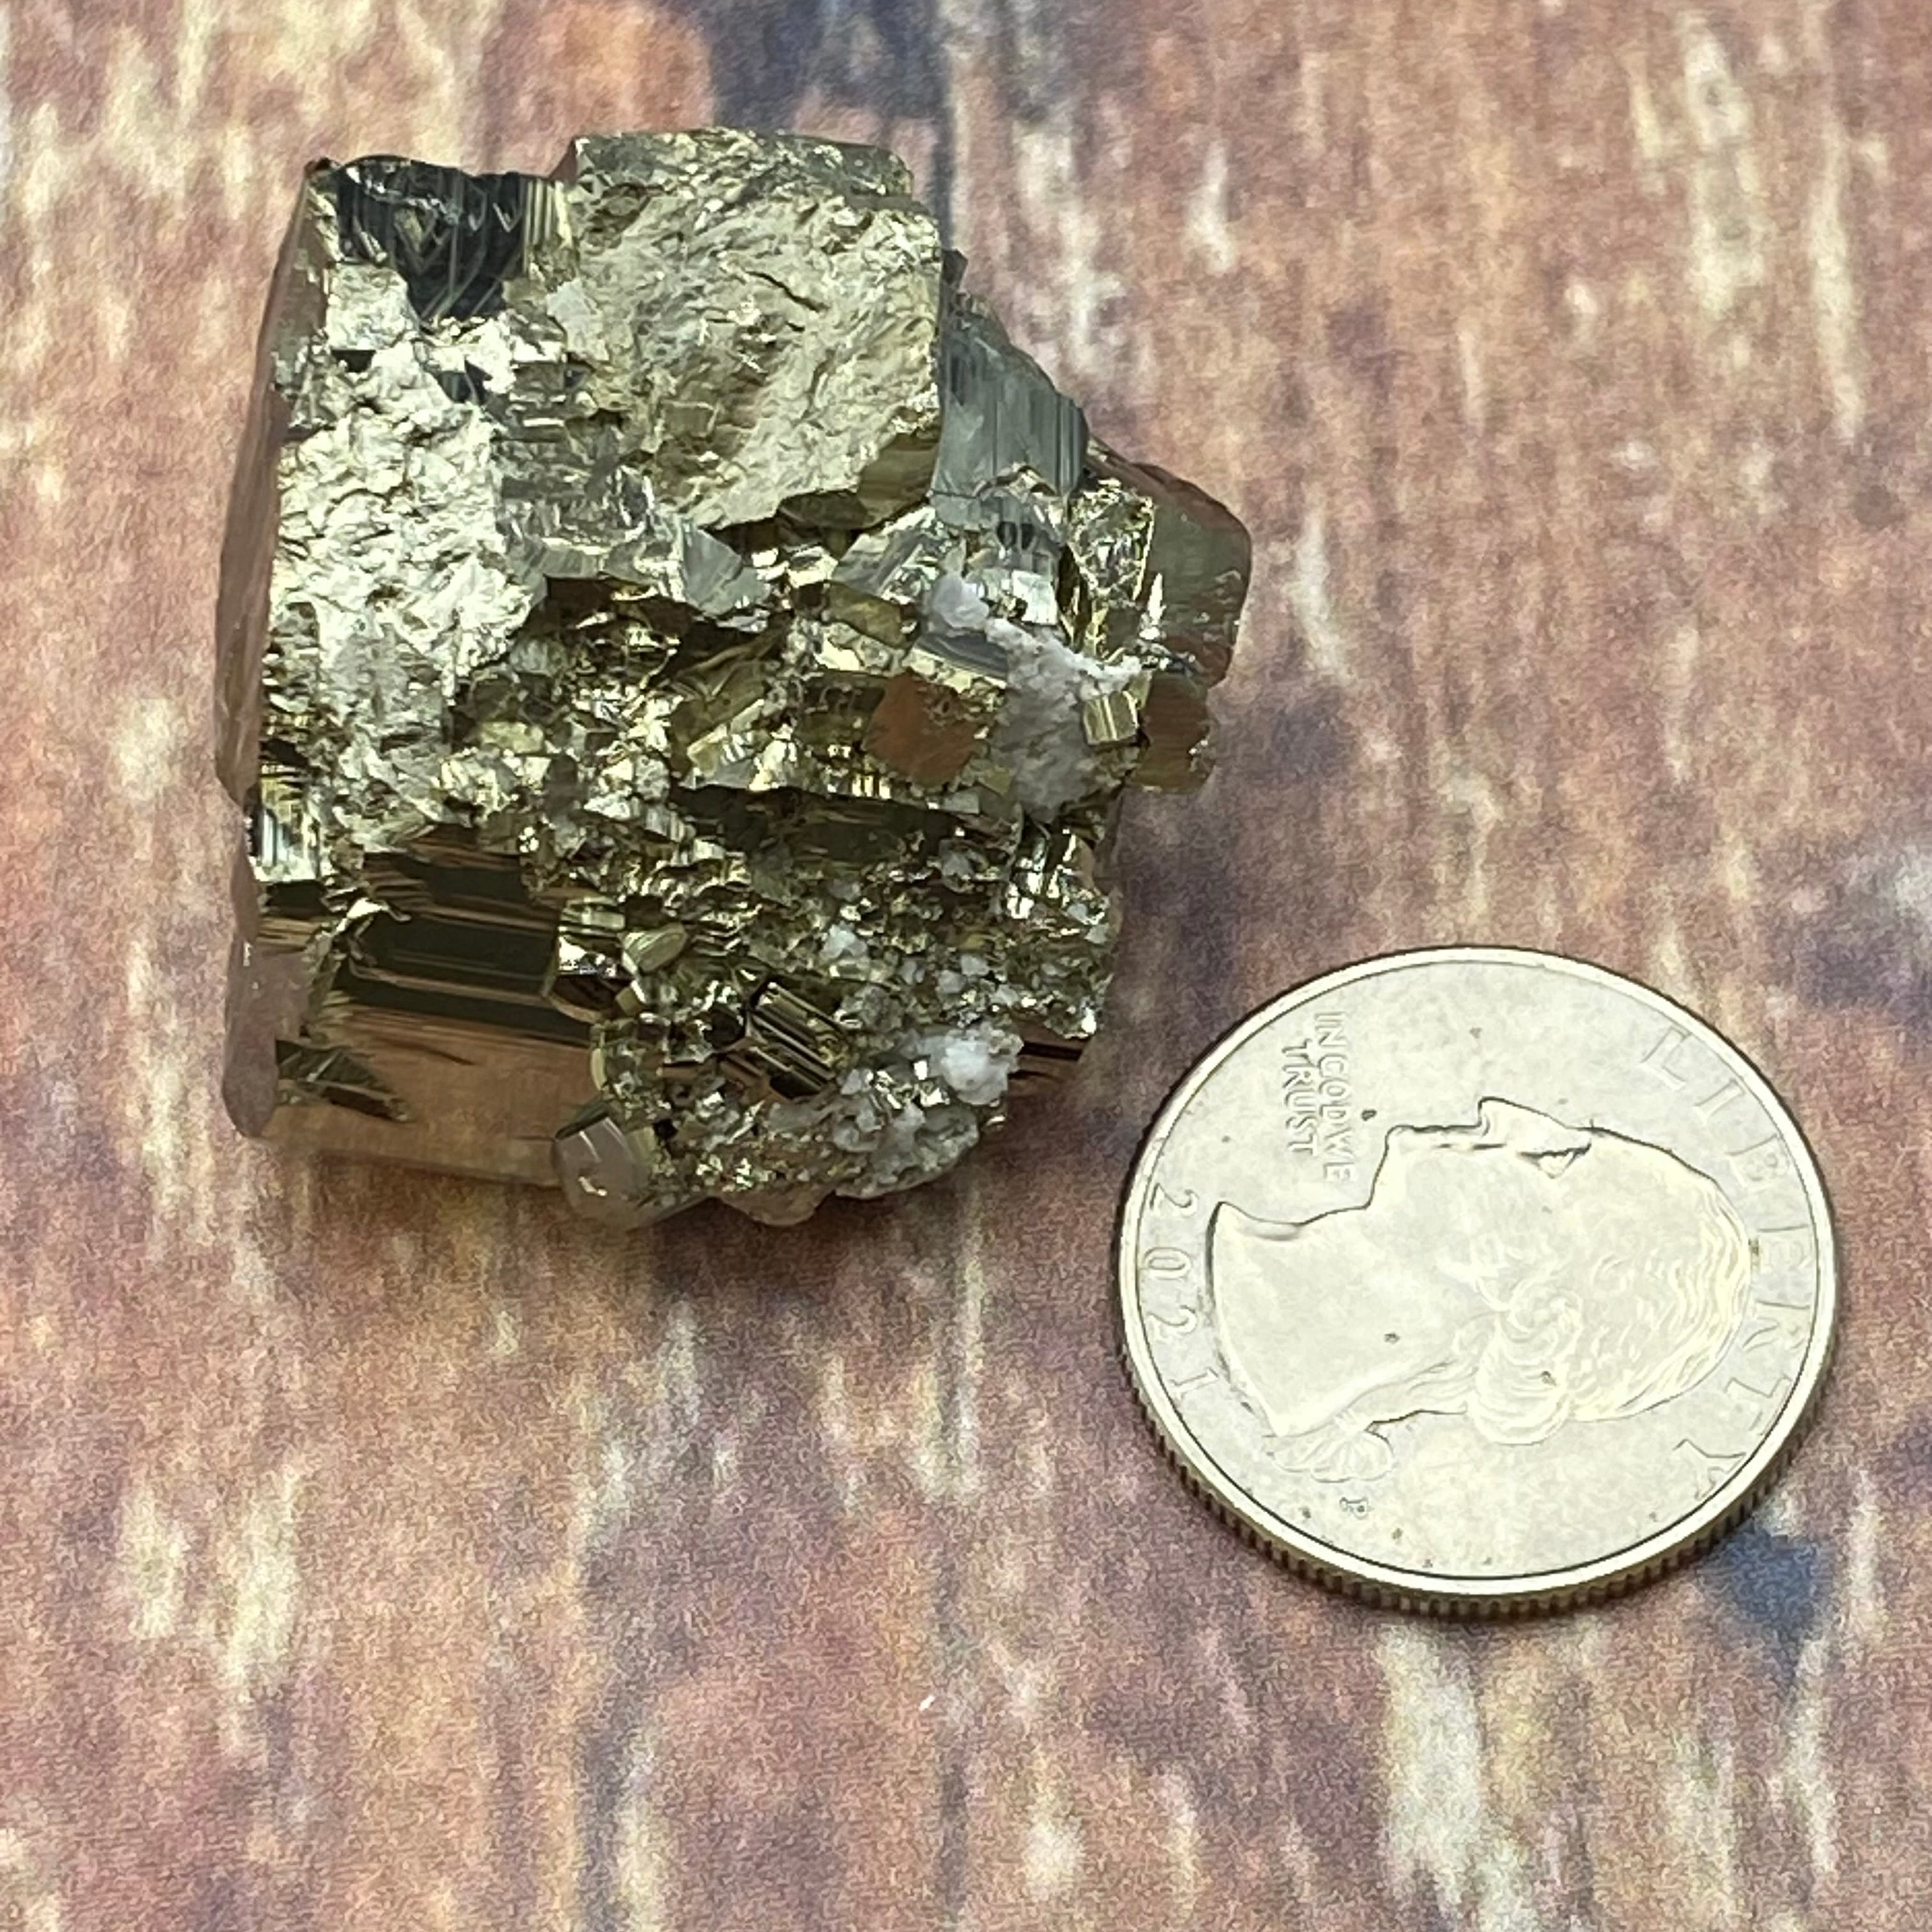 Peruvian Pyrite Crystal - 007